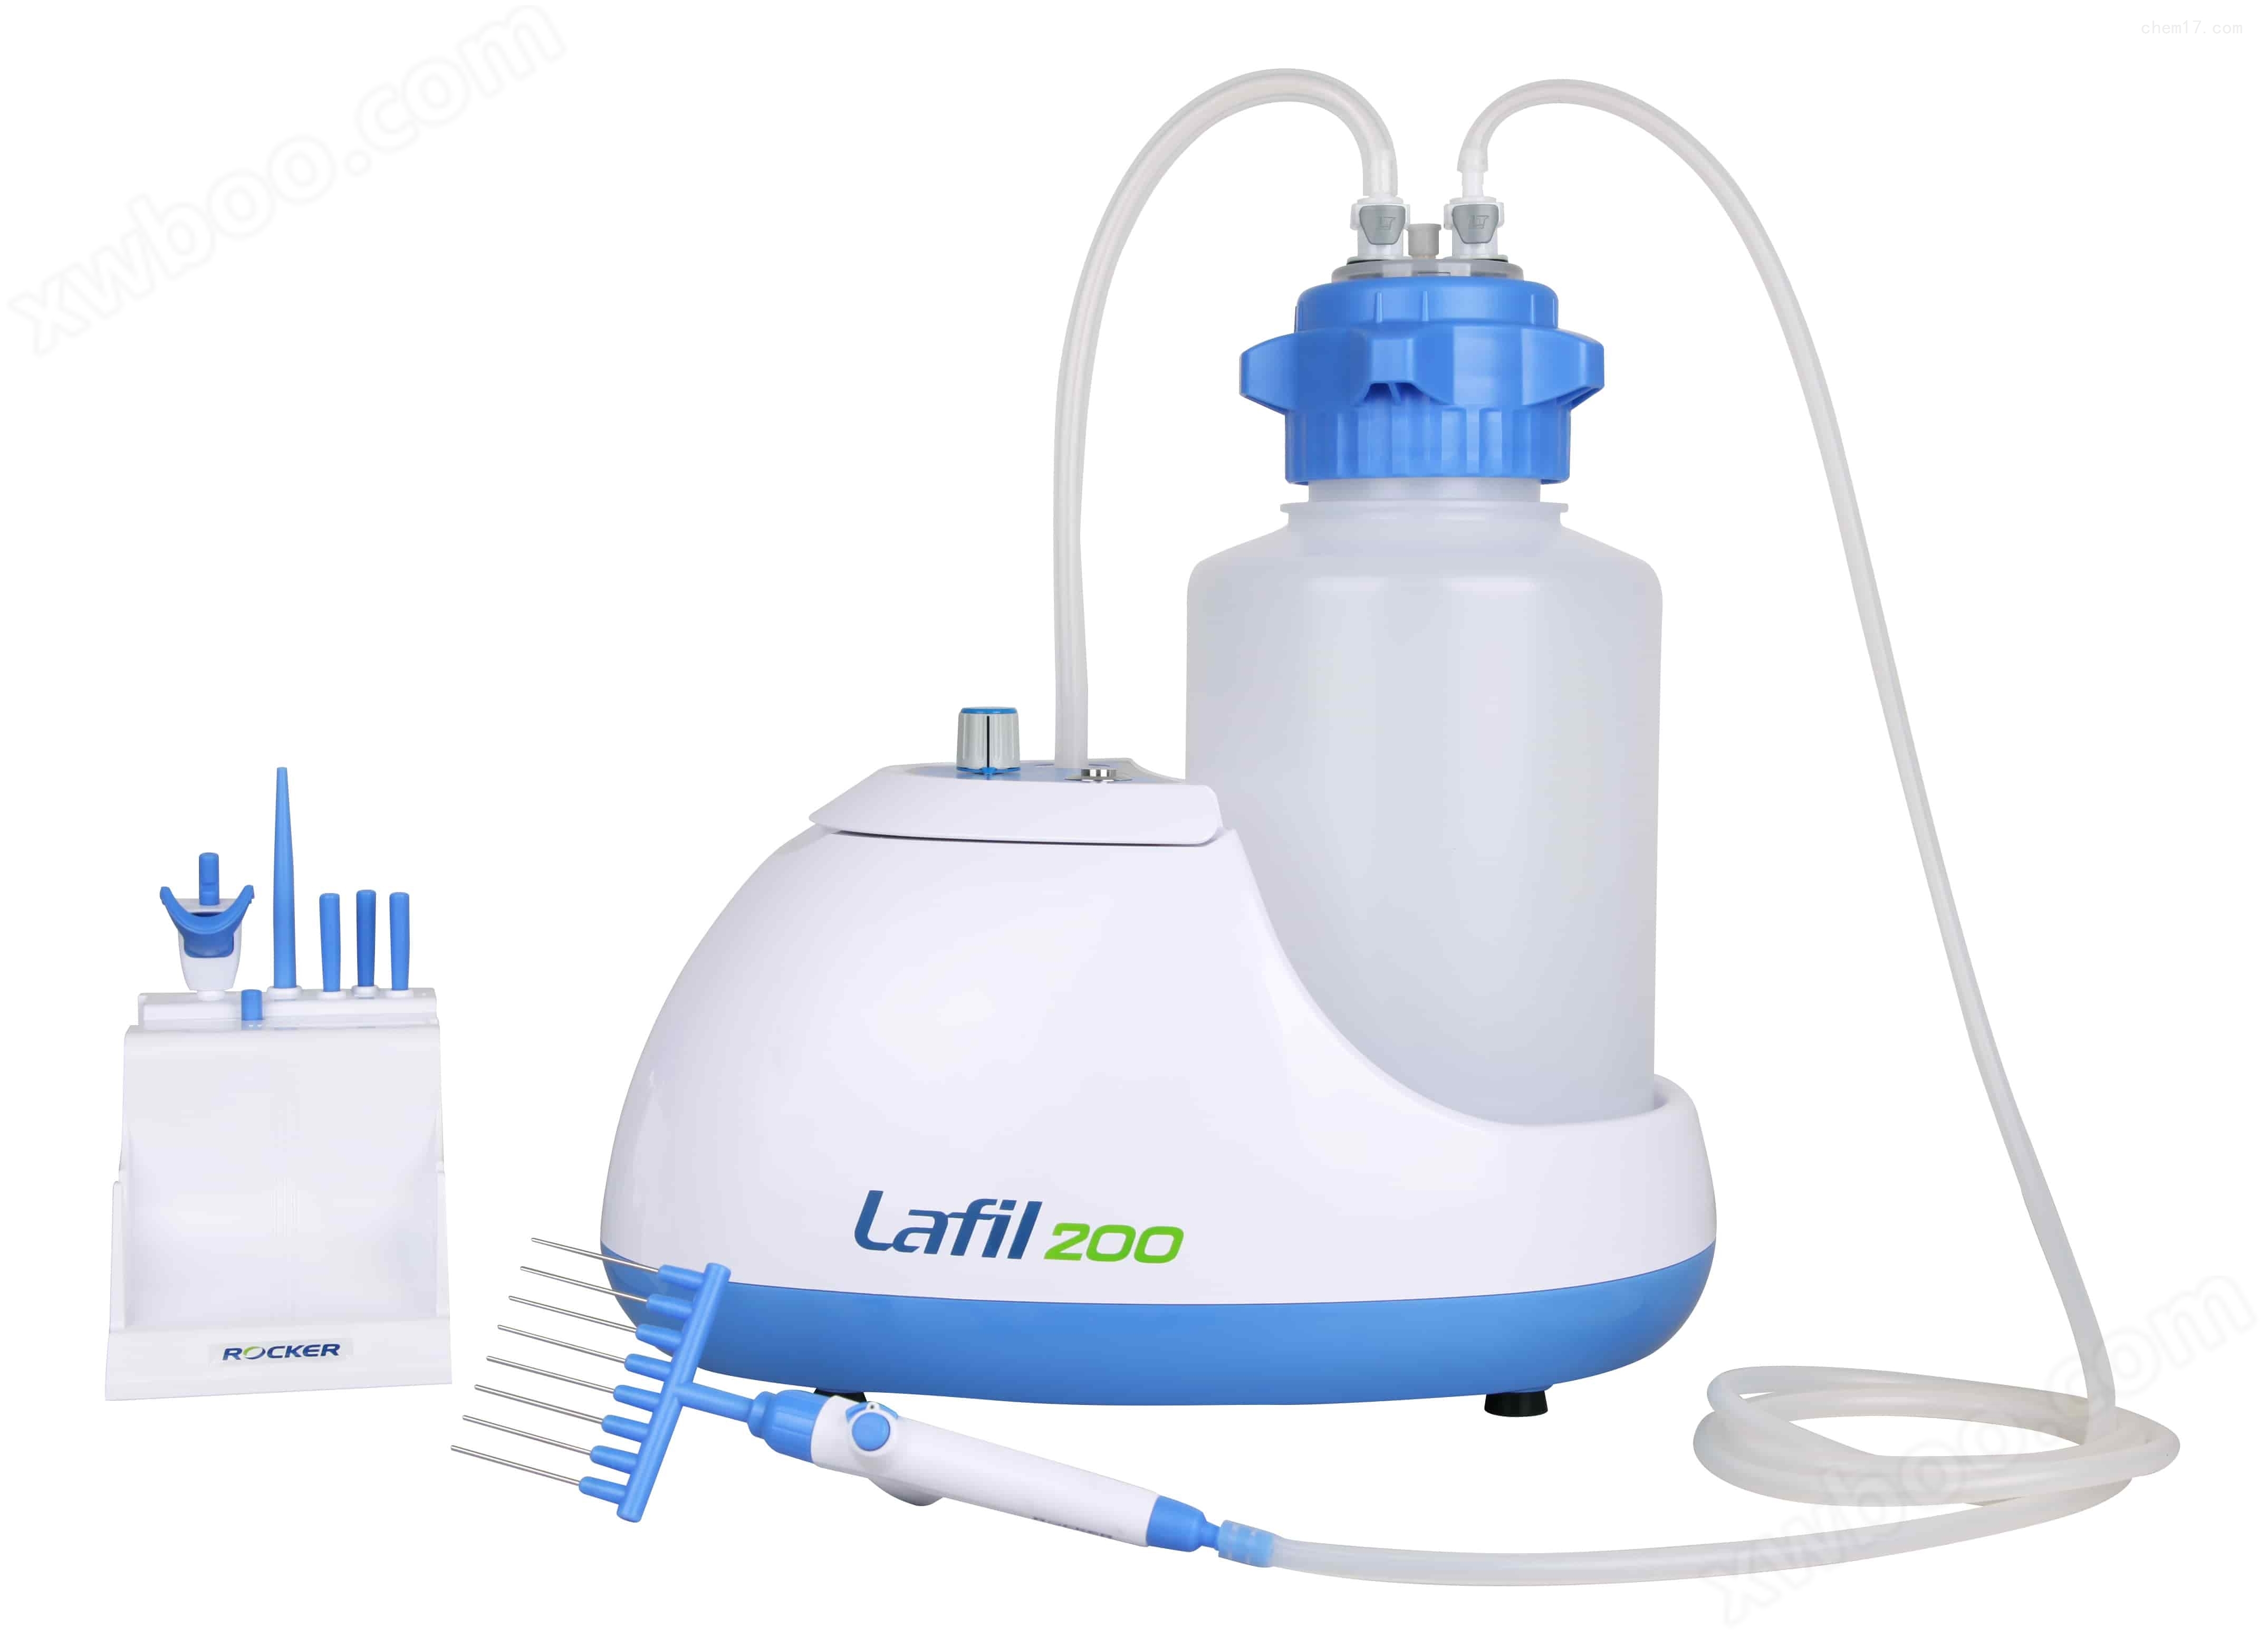 Lafil 200-BioDolphin-真空泵/废液抽吸系统